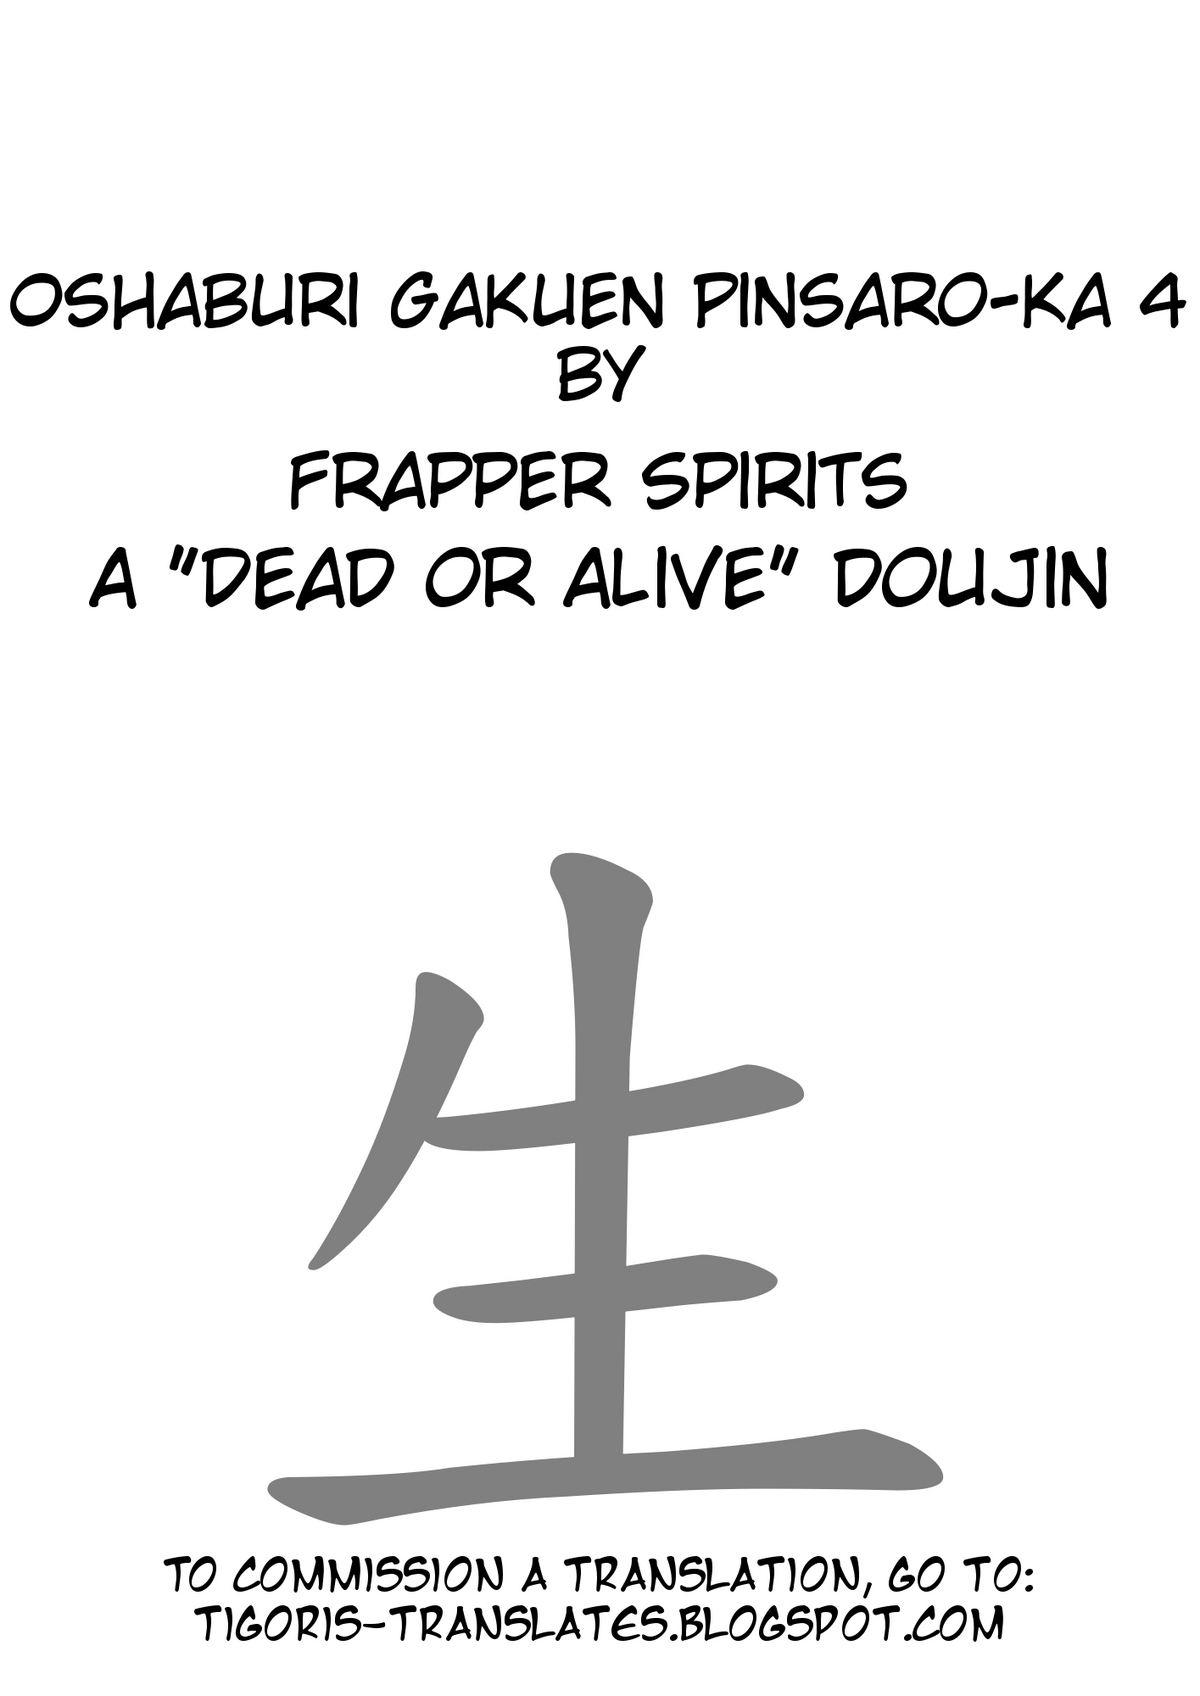 Deep Oshaburi Gakuen PinSalo-ka 4 - Dead or alive Teamskeet - Page 2